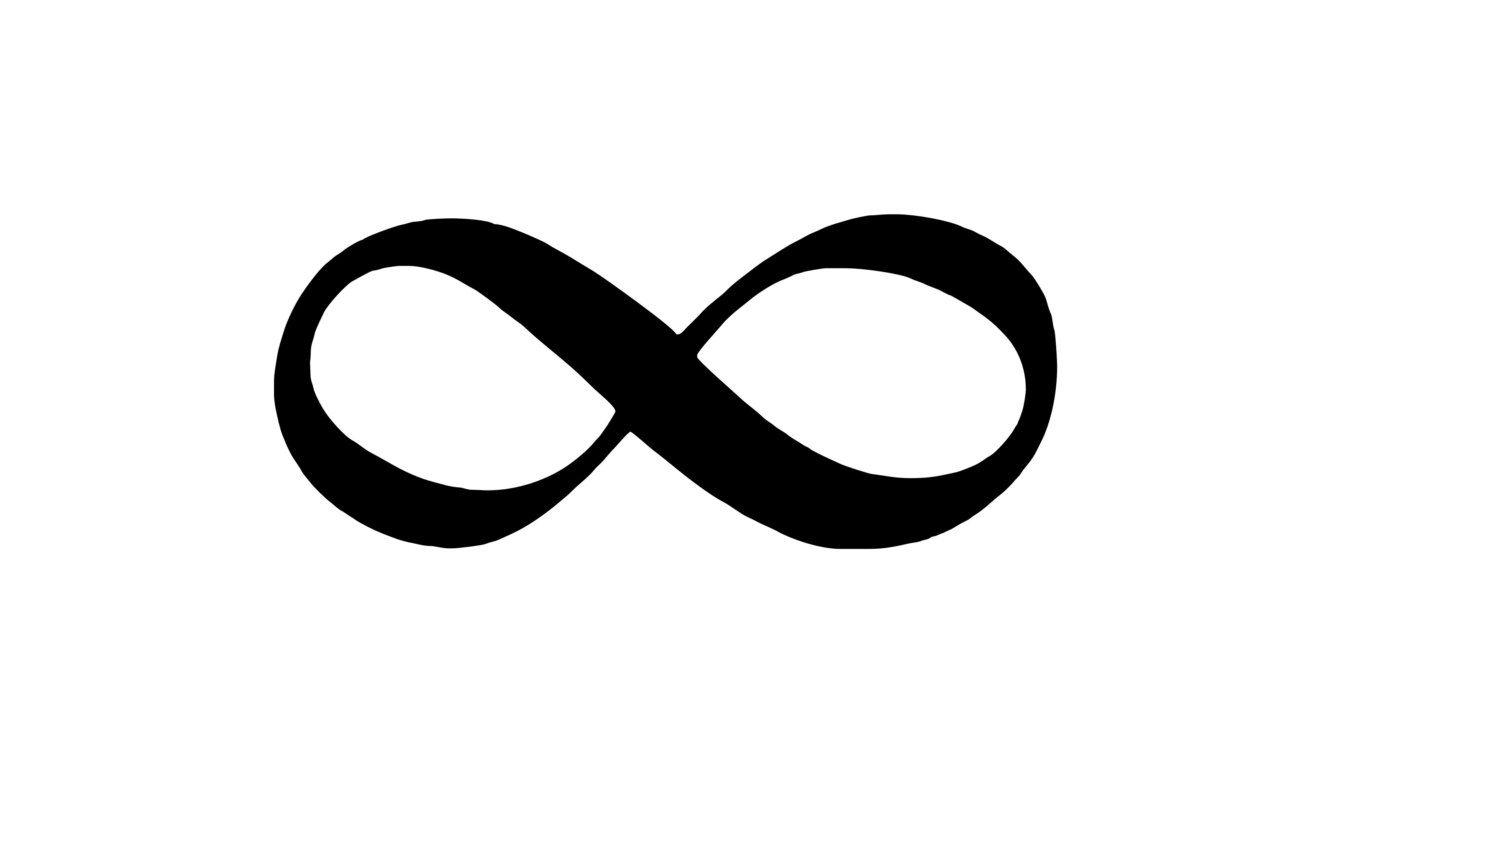 Infinity Logo - Free Infinity Symbol, Download Free Clip Art, Free Clip Art on ...